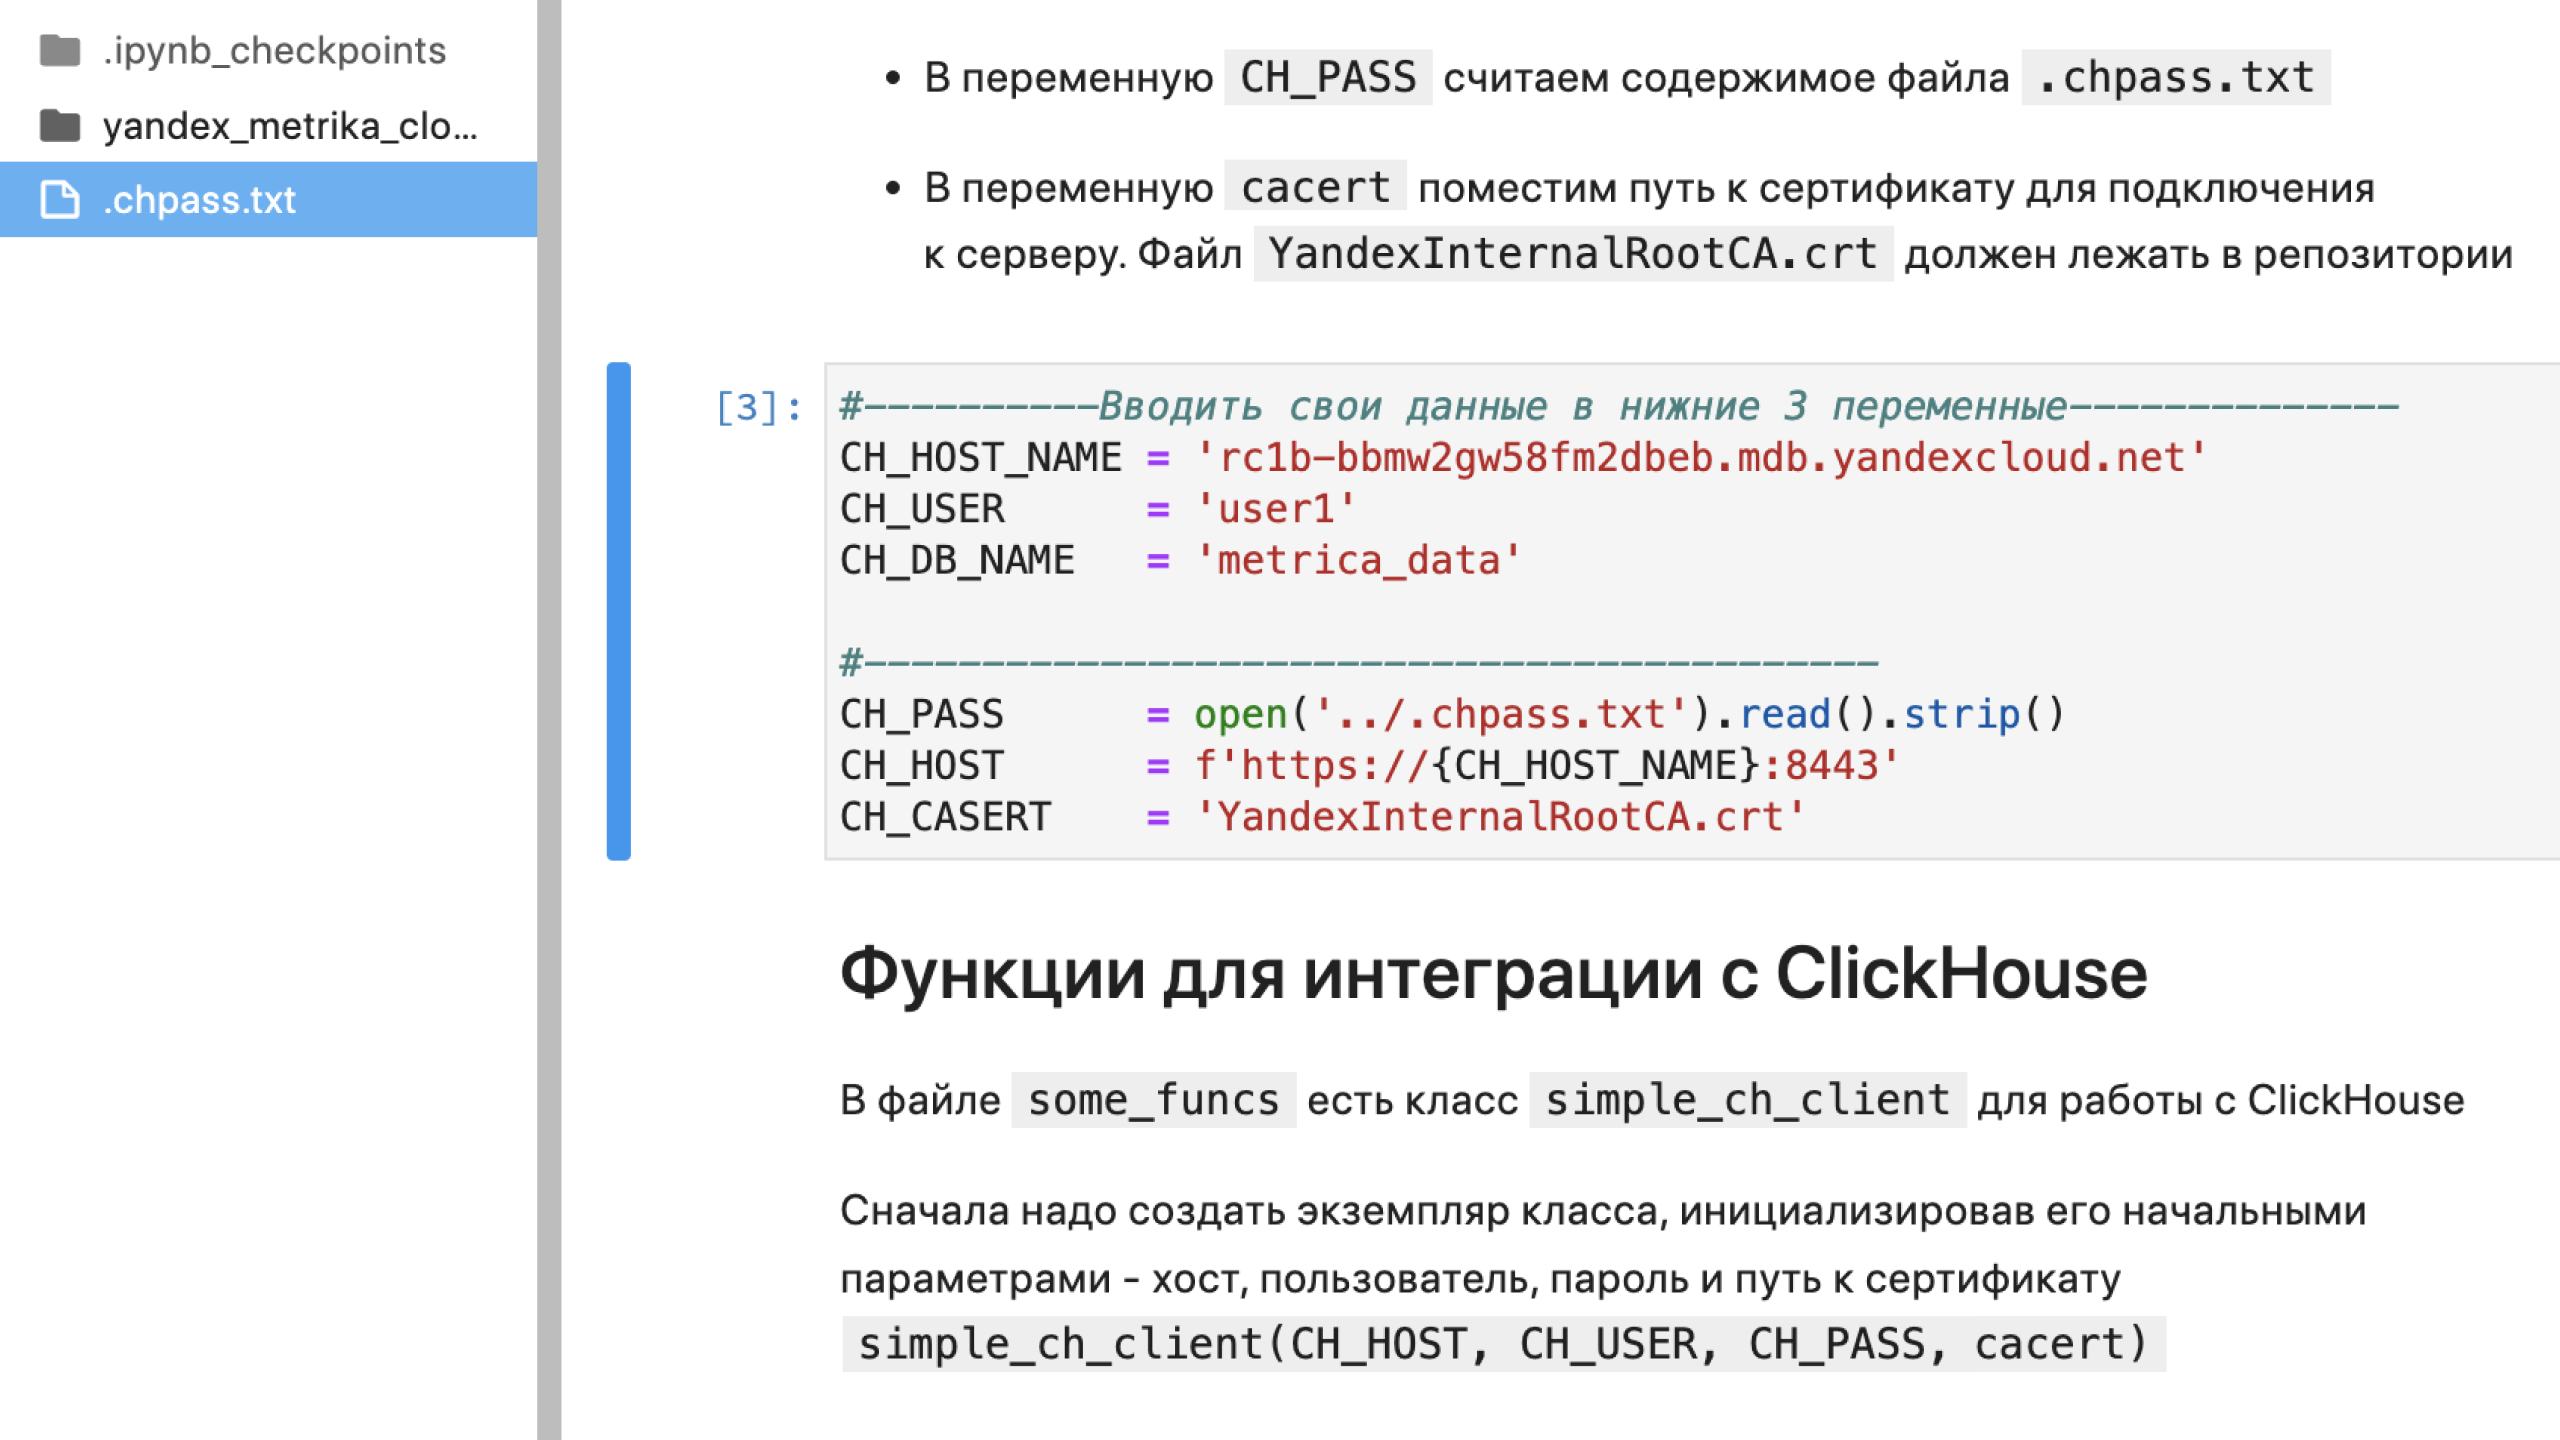 загрузка данных из Yandex DataSphere в ClickHouse